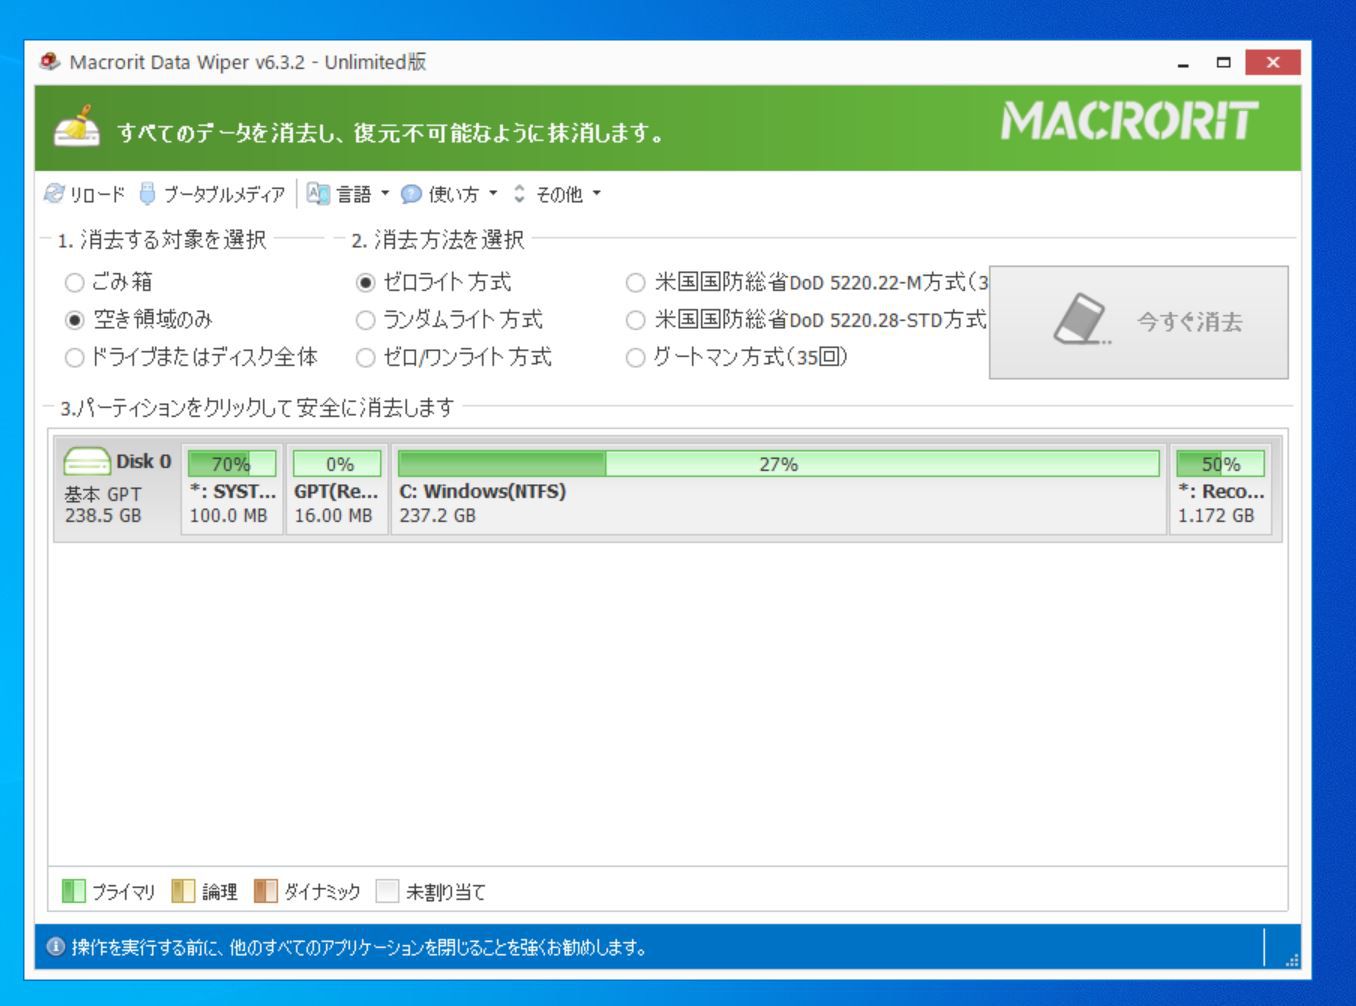 Macrorit Data Wiper 6.9 instal the last version for mac